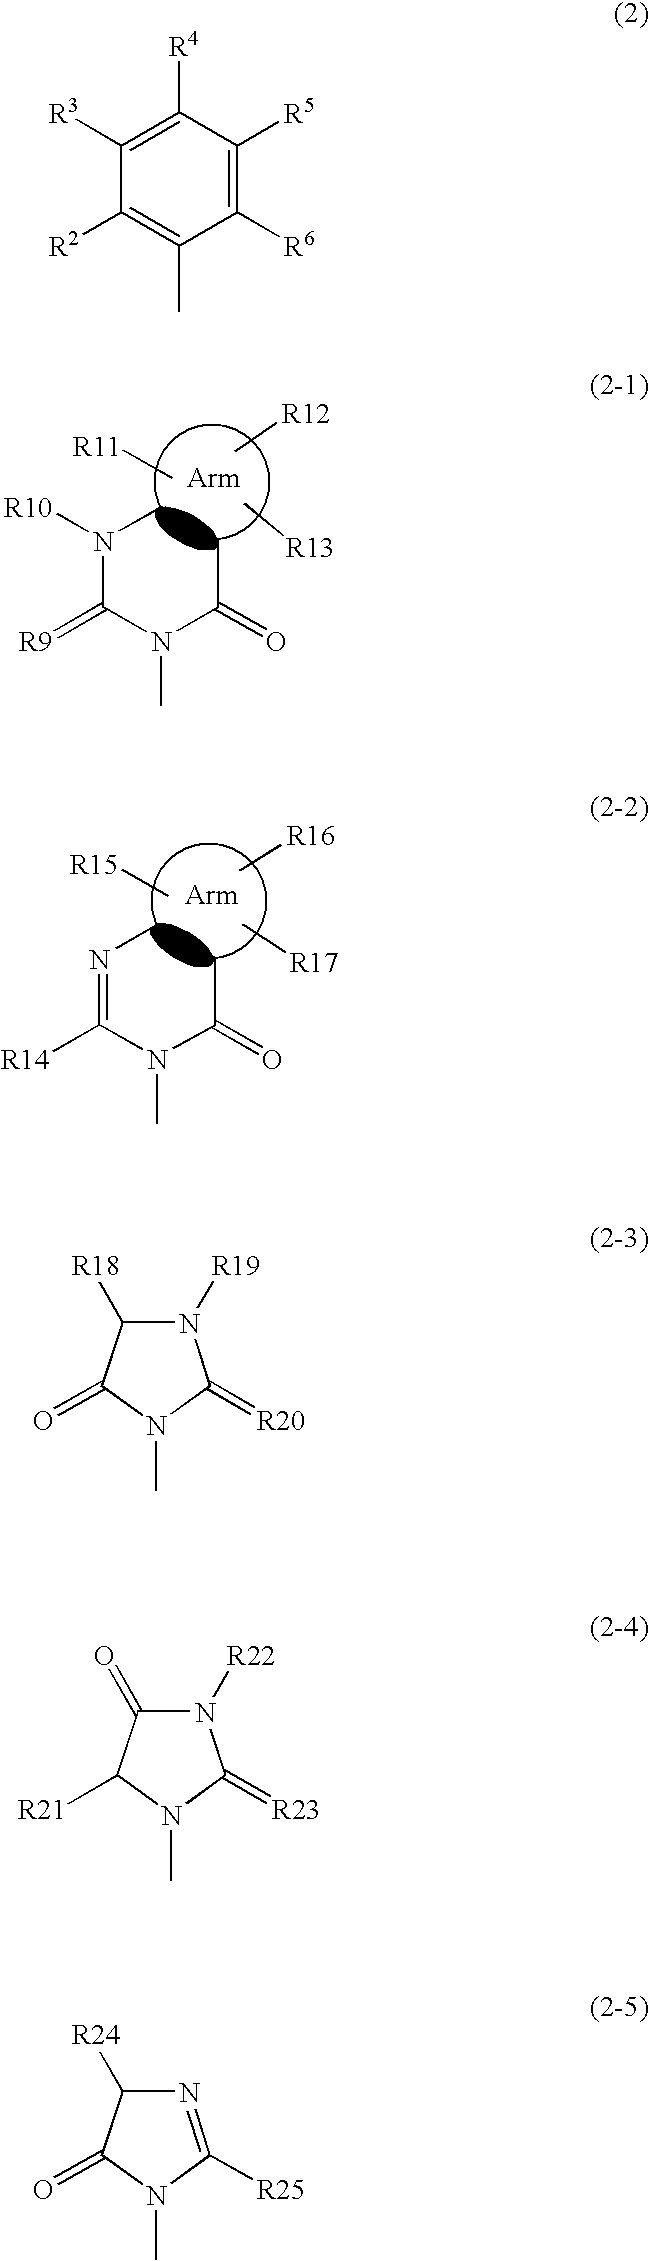 Phenylpropionic acid derivatives